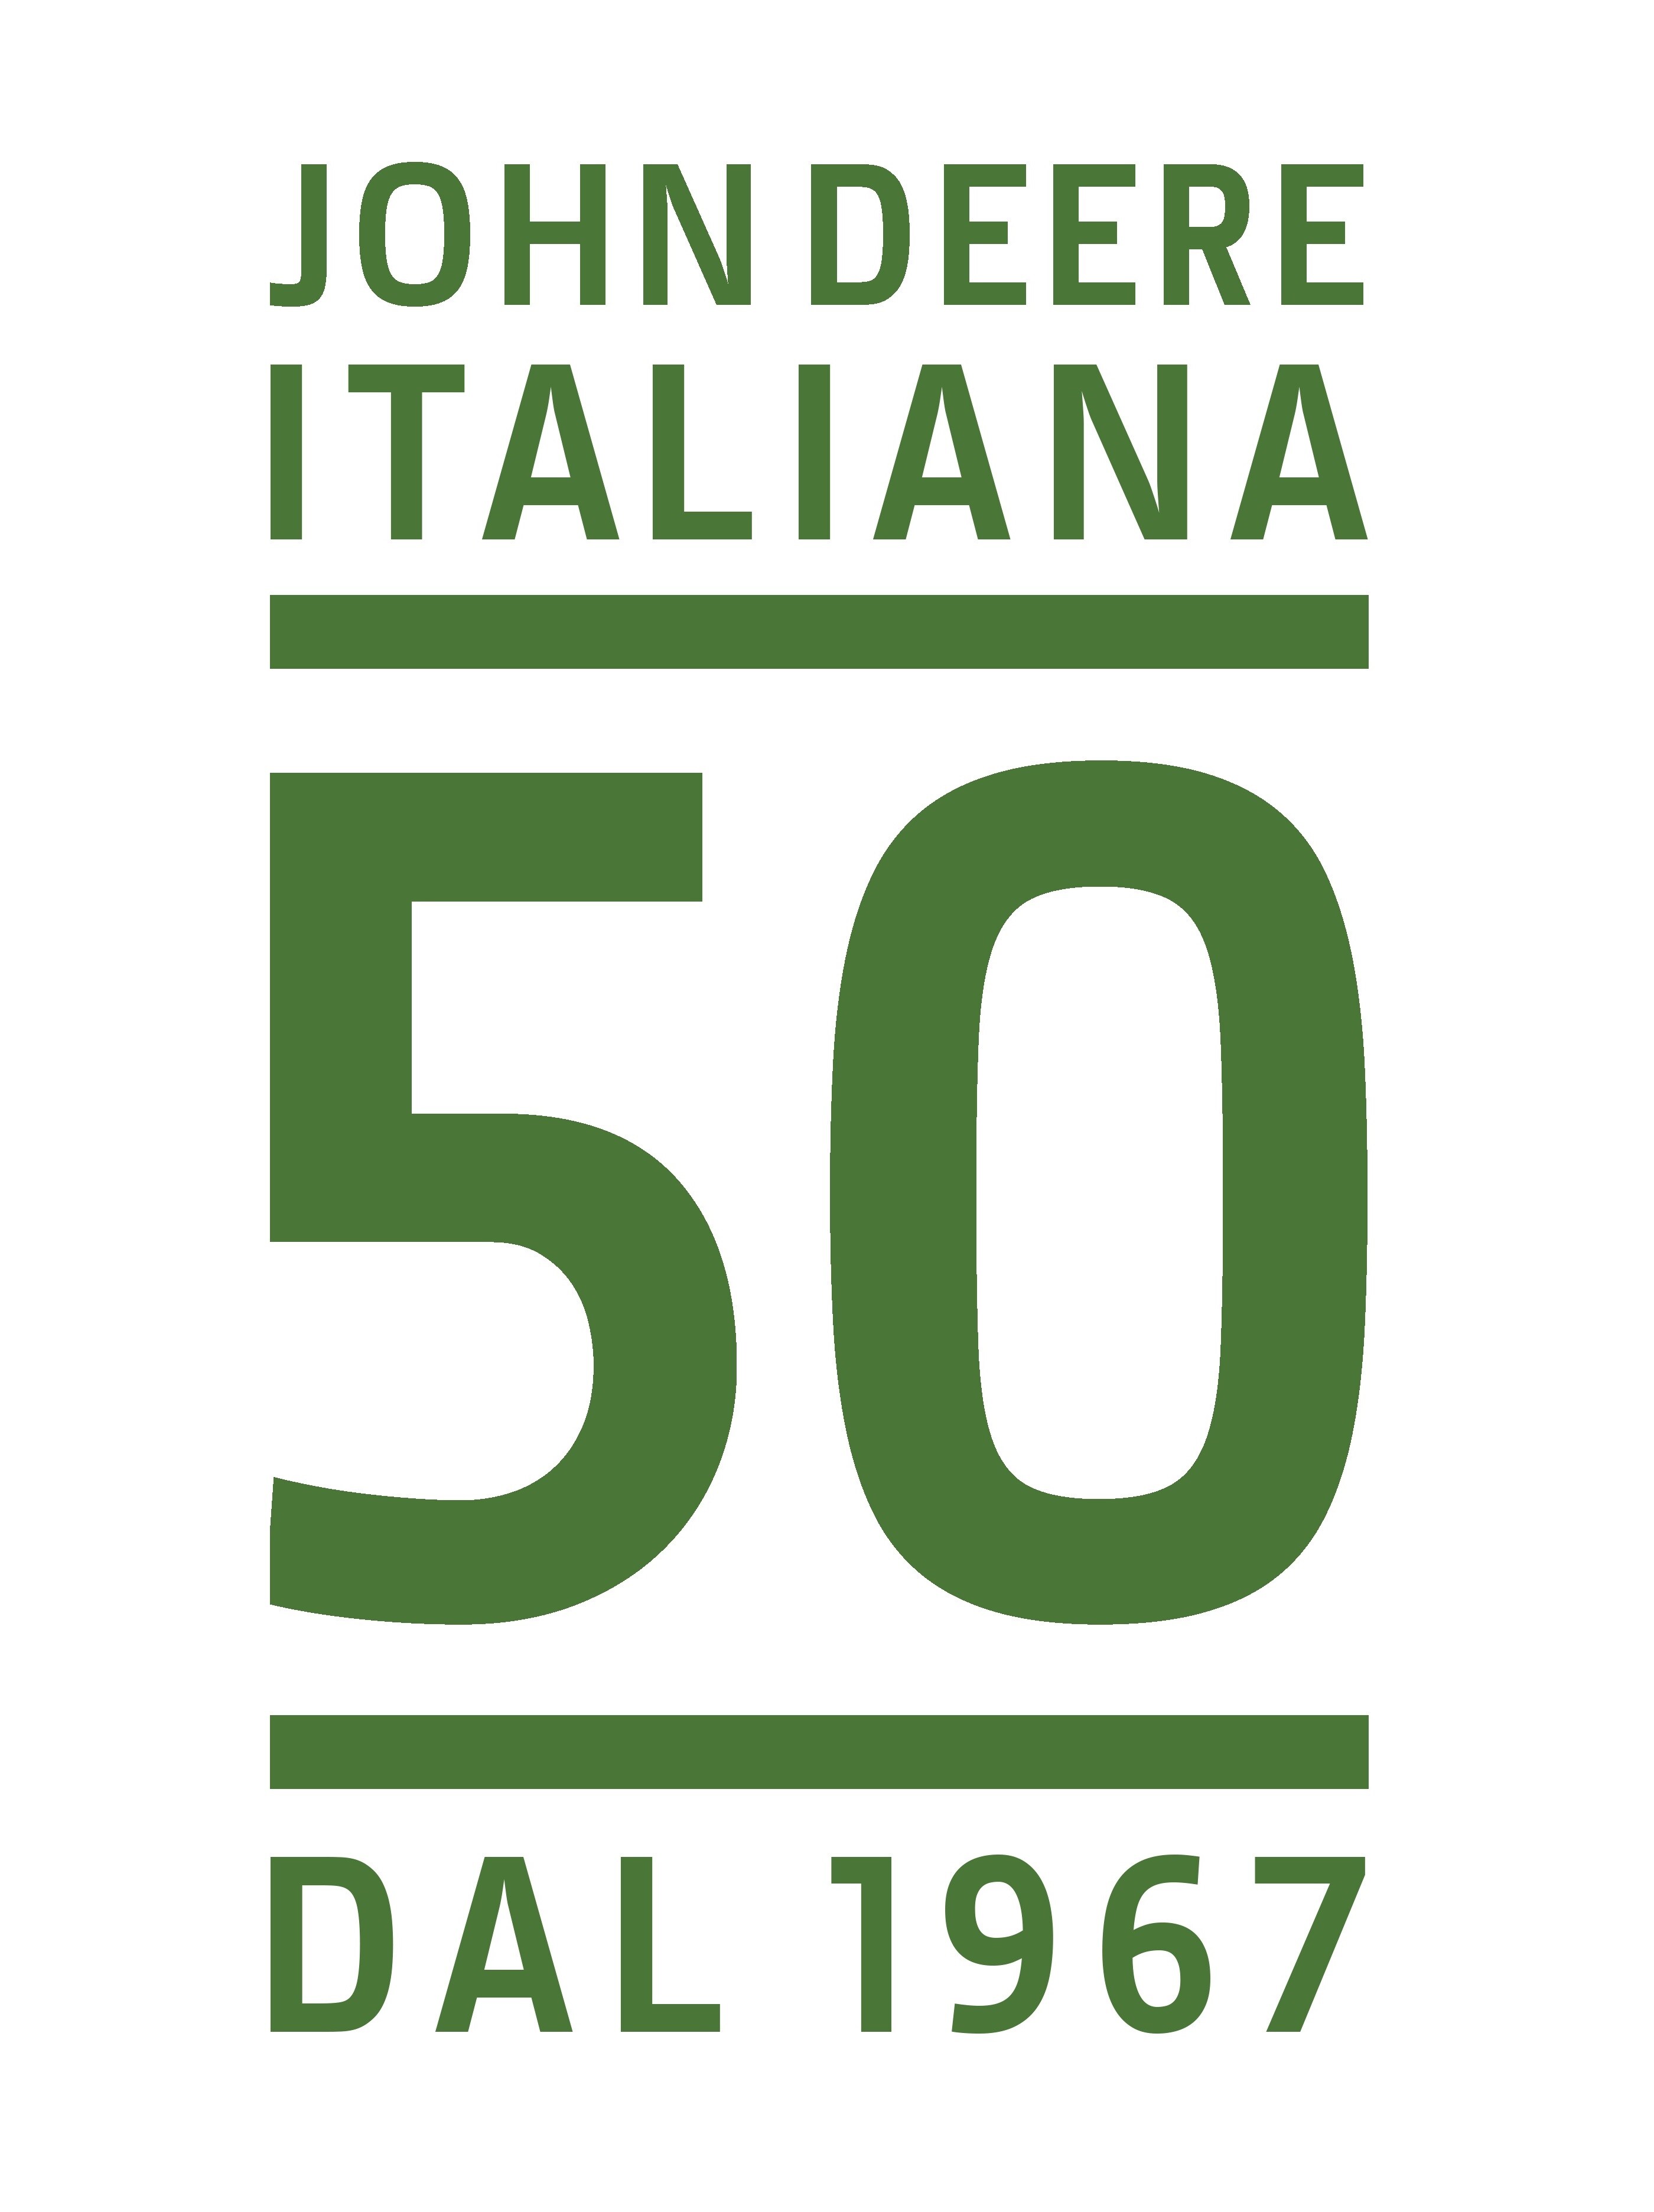 John Deere Italiana 50 anni